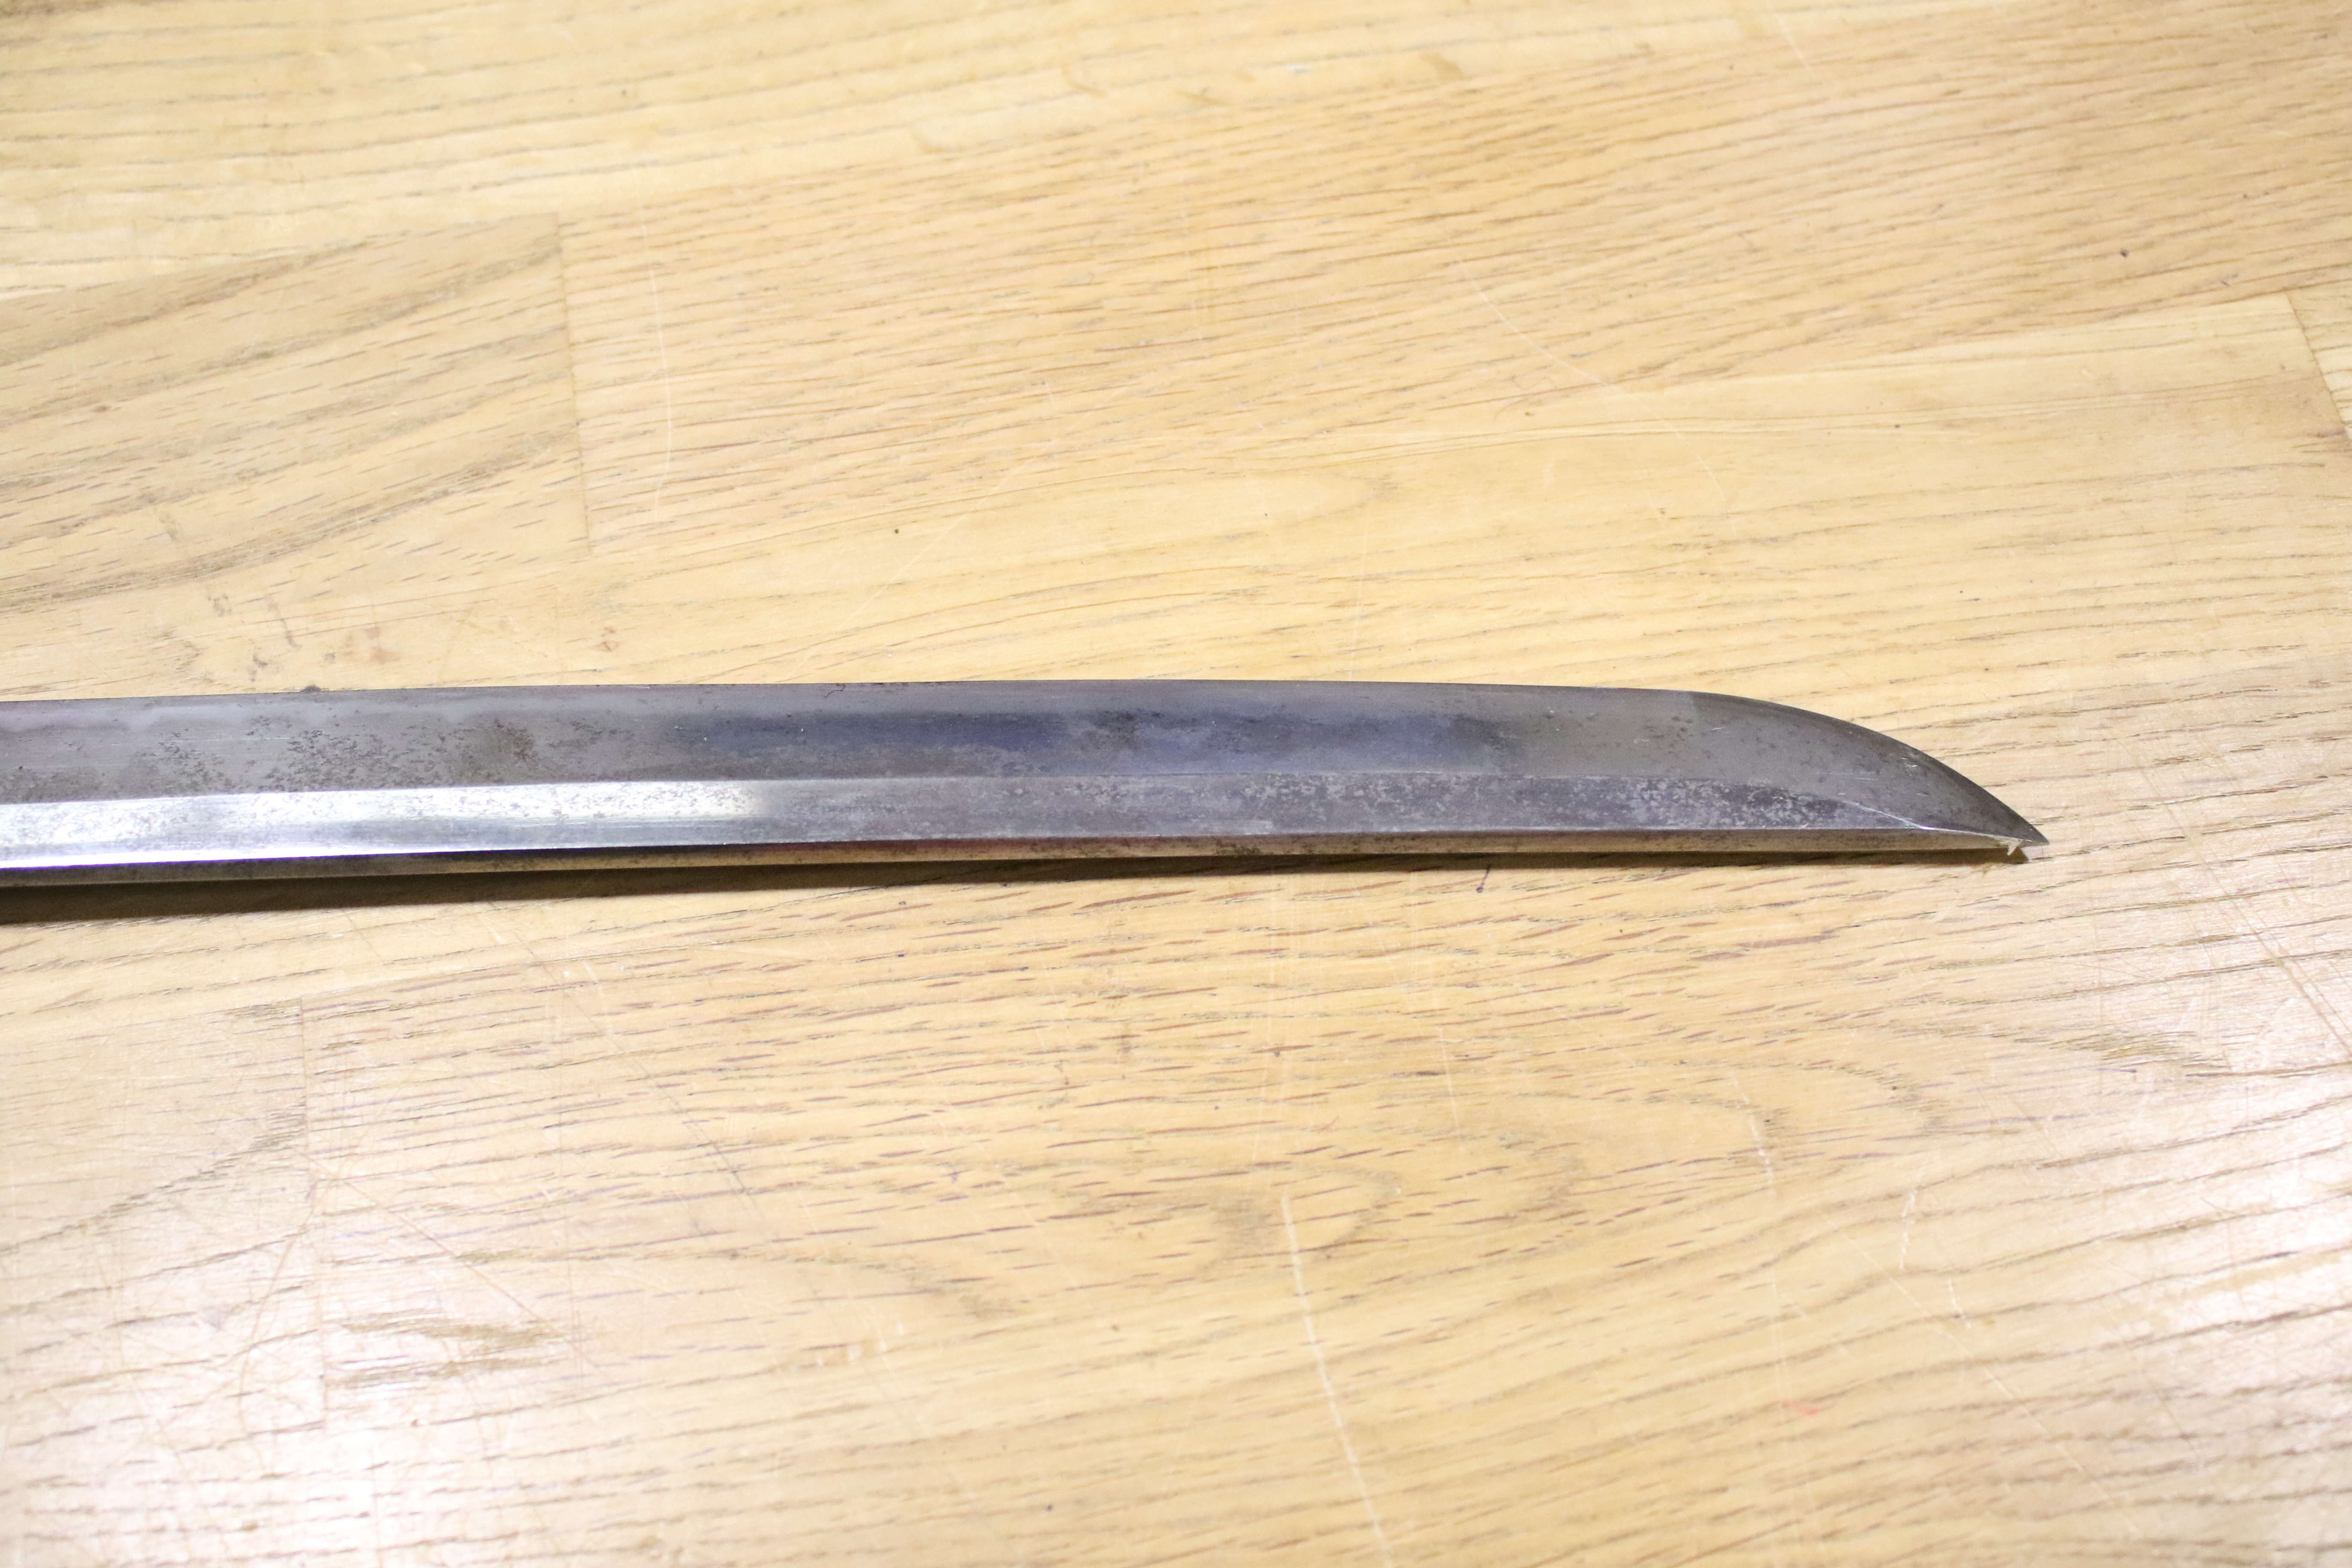 A Japanese WWII military 'gunto' Katana sword. - Image 13 of 16